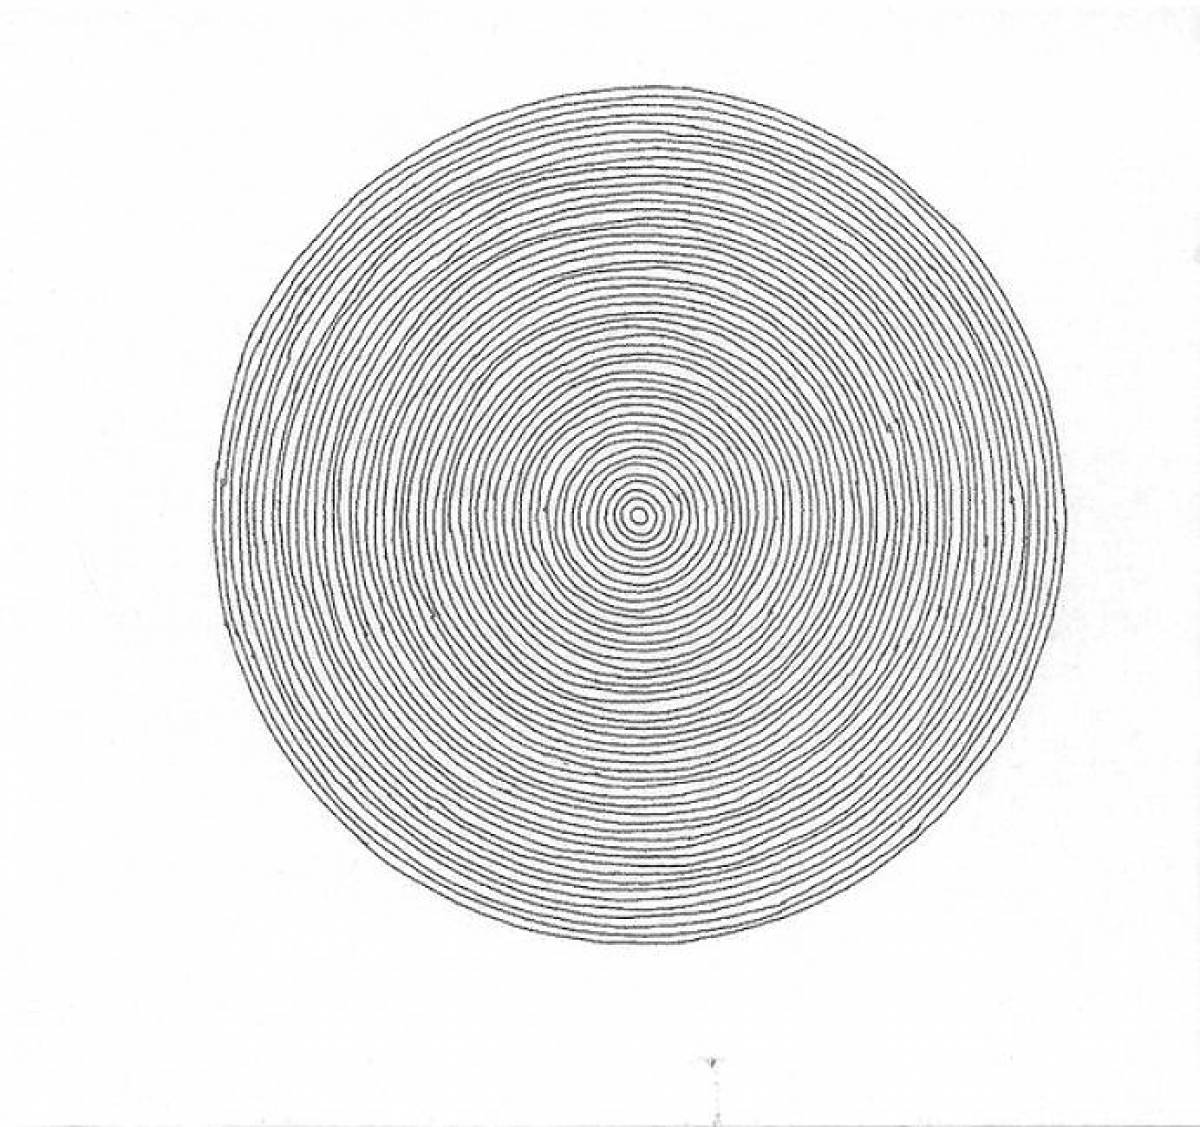 Glitter coloring in a circle in a spiral